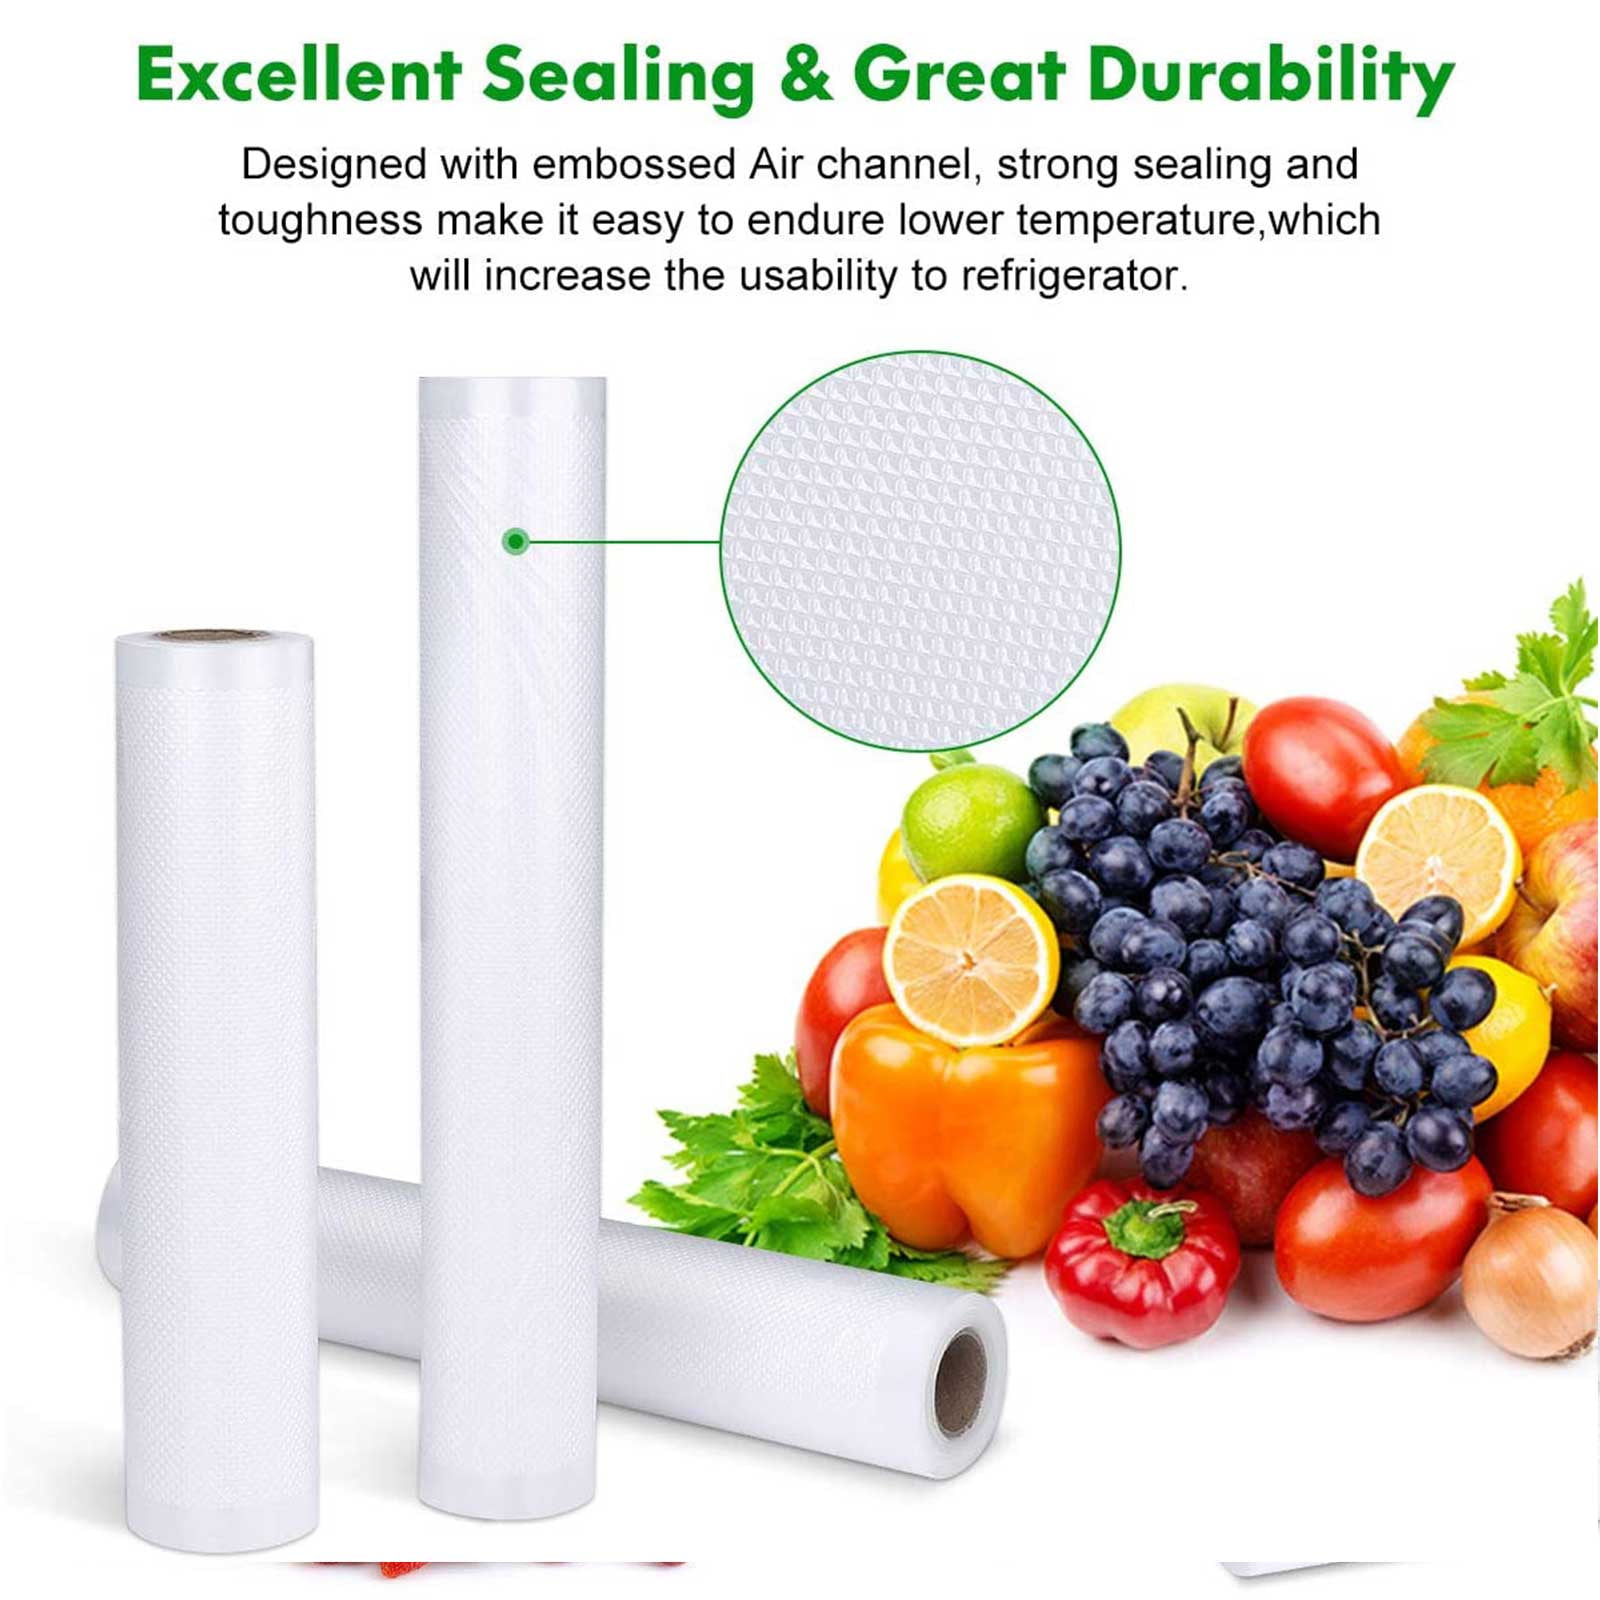 Ziploc® Brand Vacuum Sealer  Keep Food Fresh Longer - Three Different  Directions